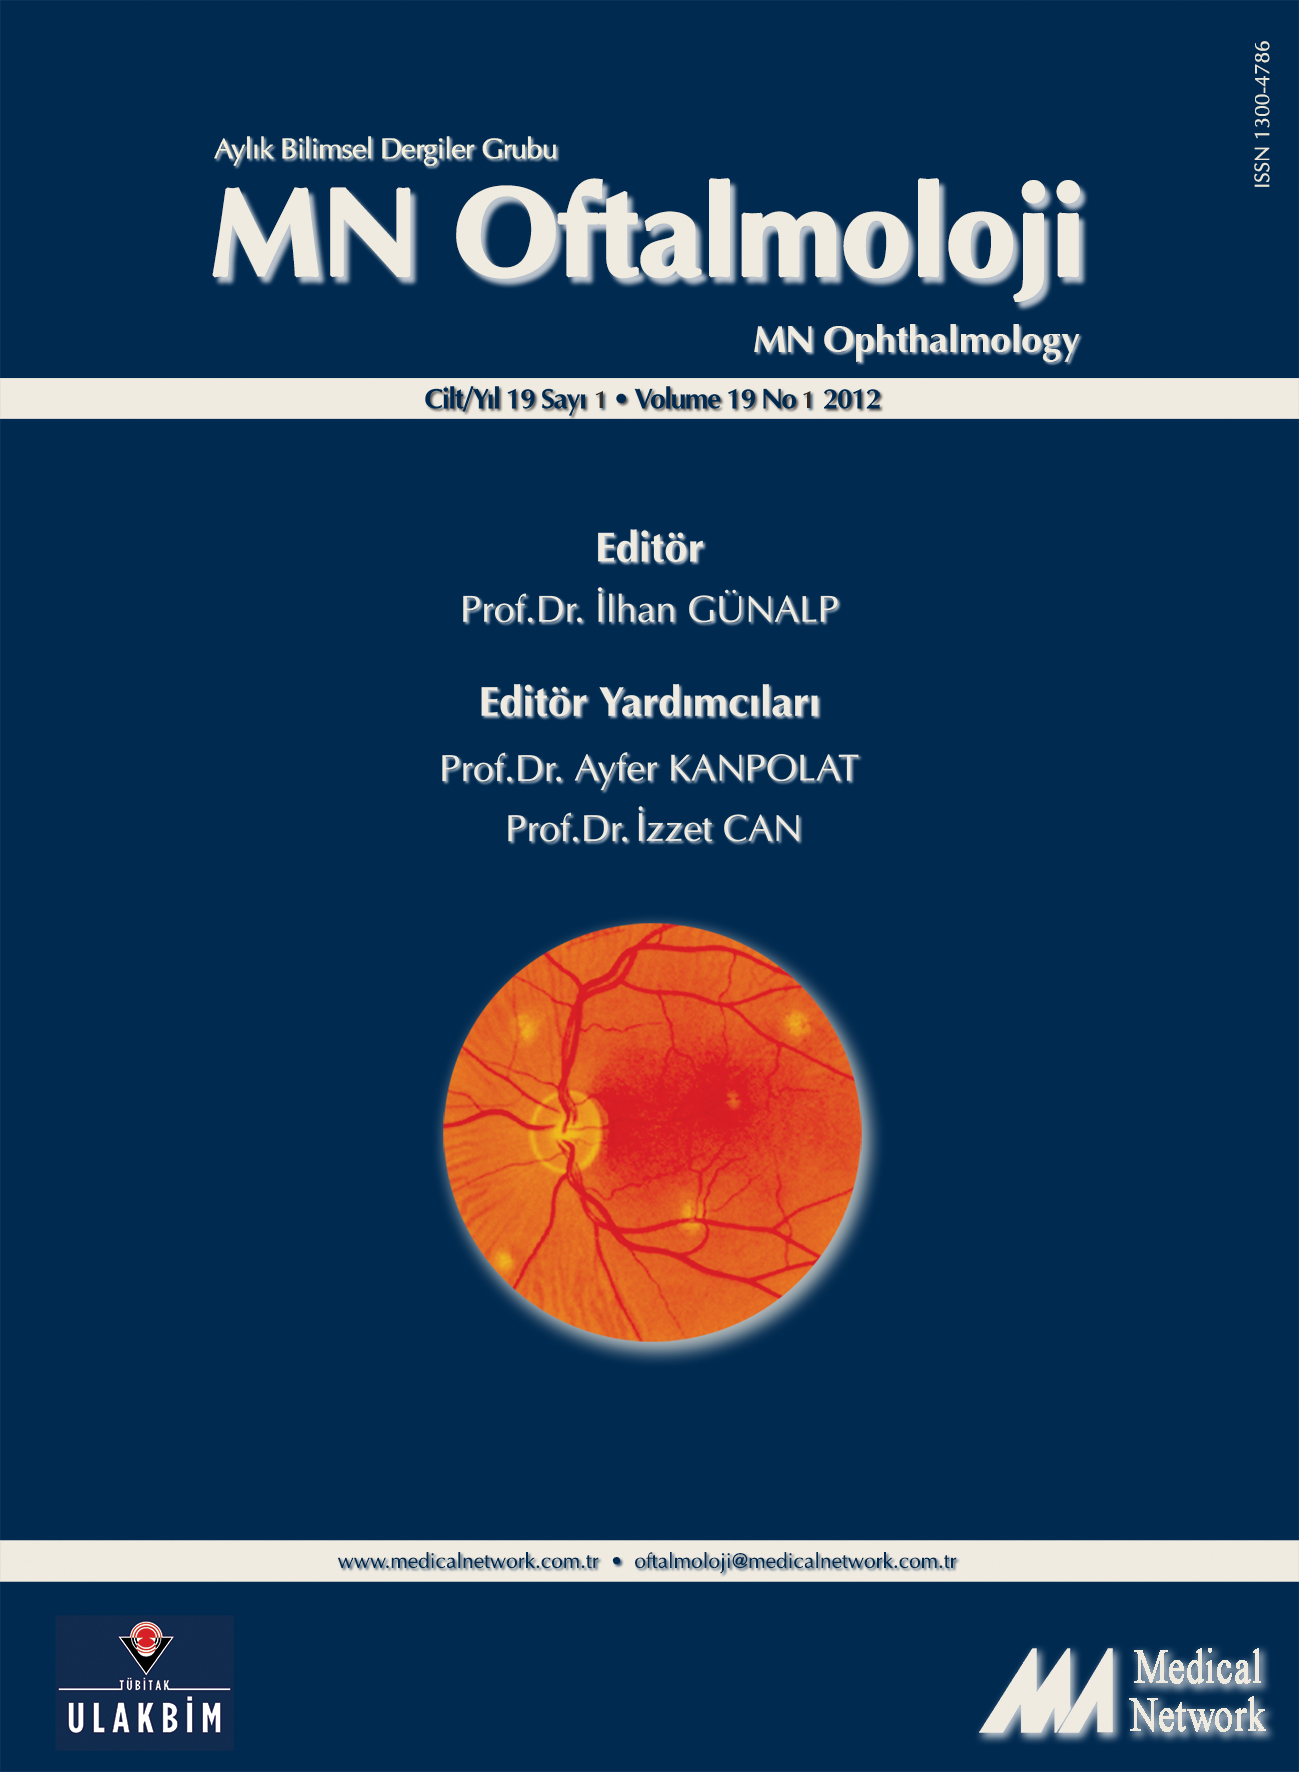 <p>MN Oftalmoloji Cilt: 19 Say: 1 2012 (MN Ophthalmology Volume: 19 No 1 2012)</p>